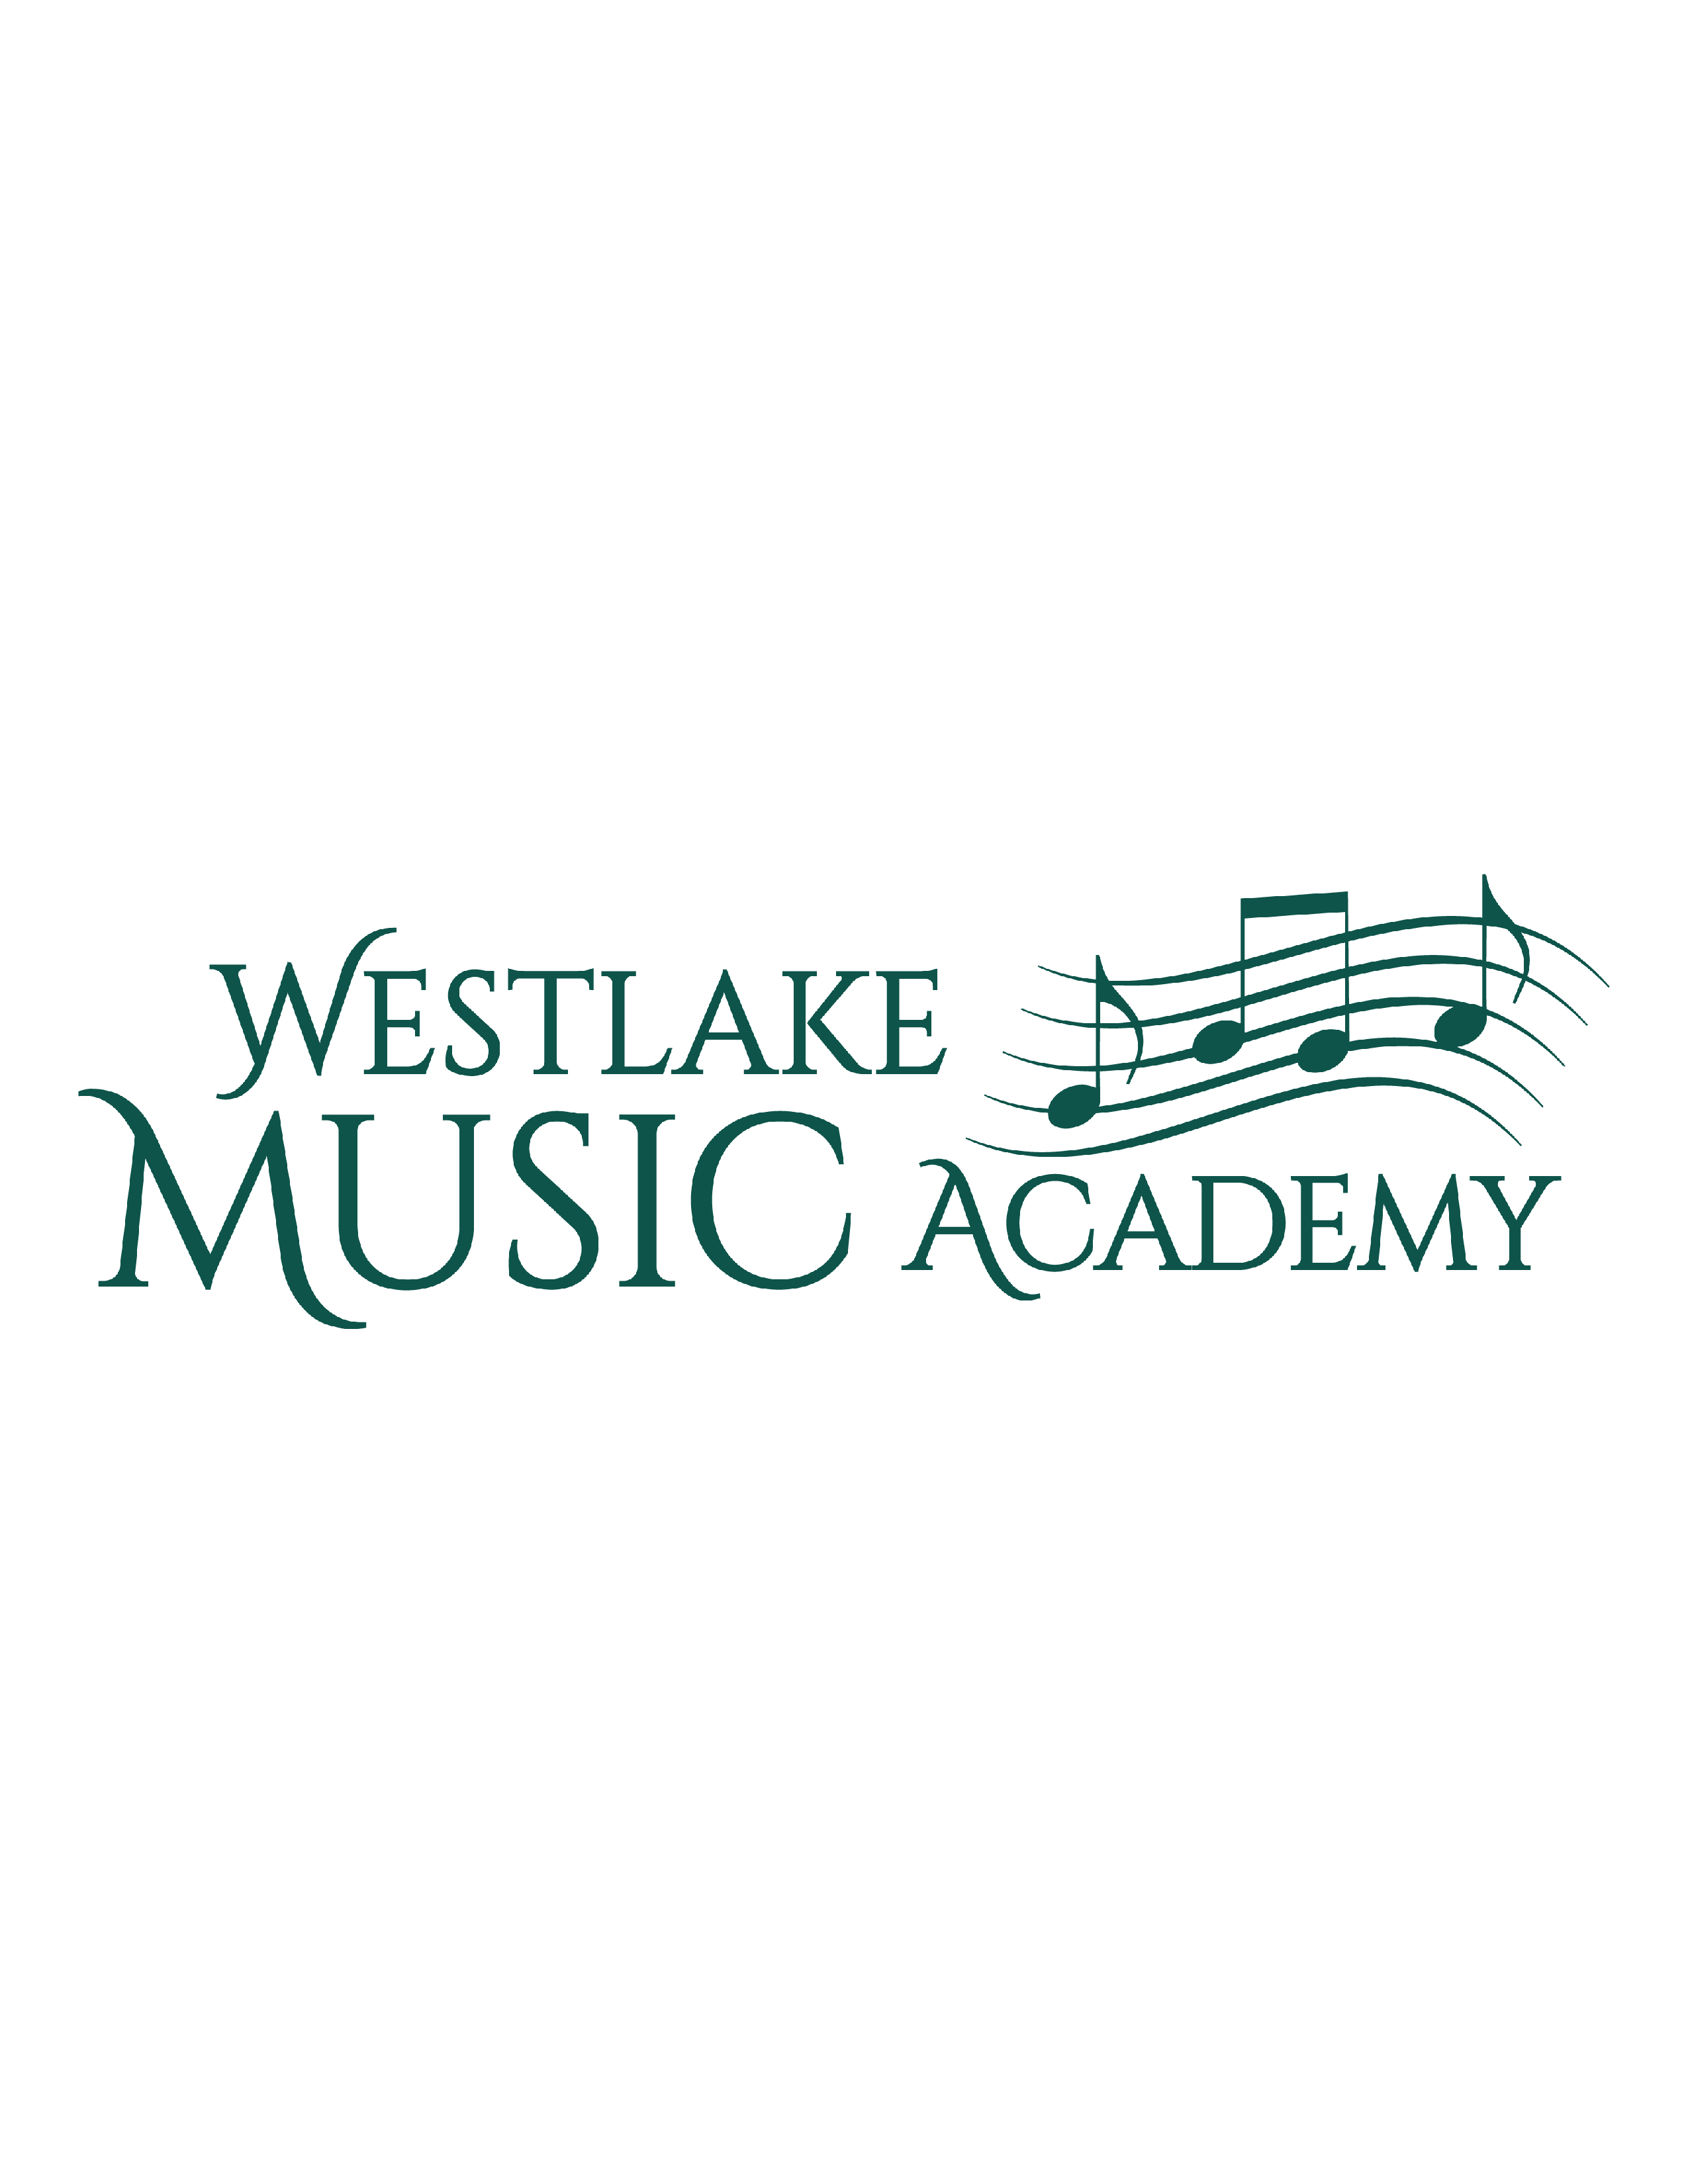 Westlake Music Academy logo